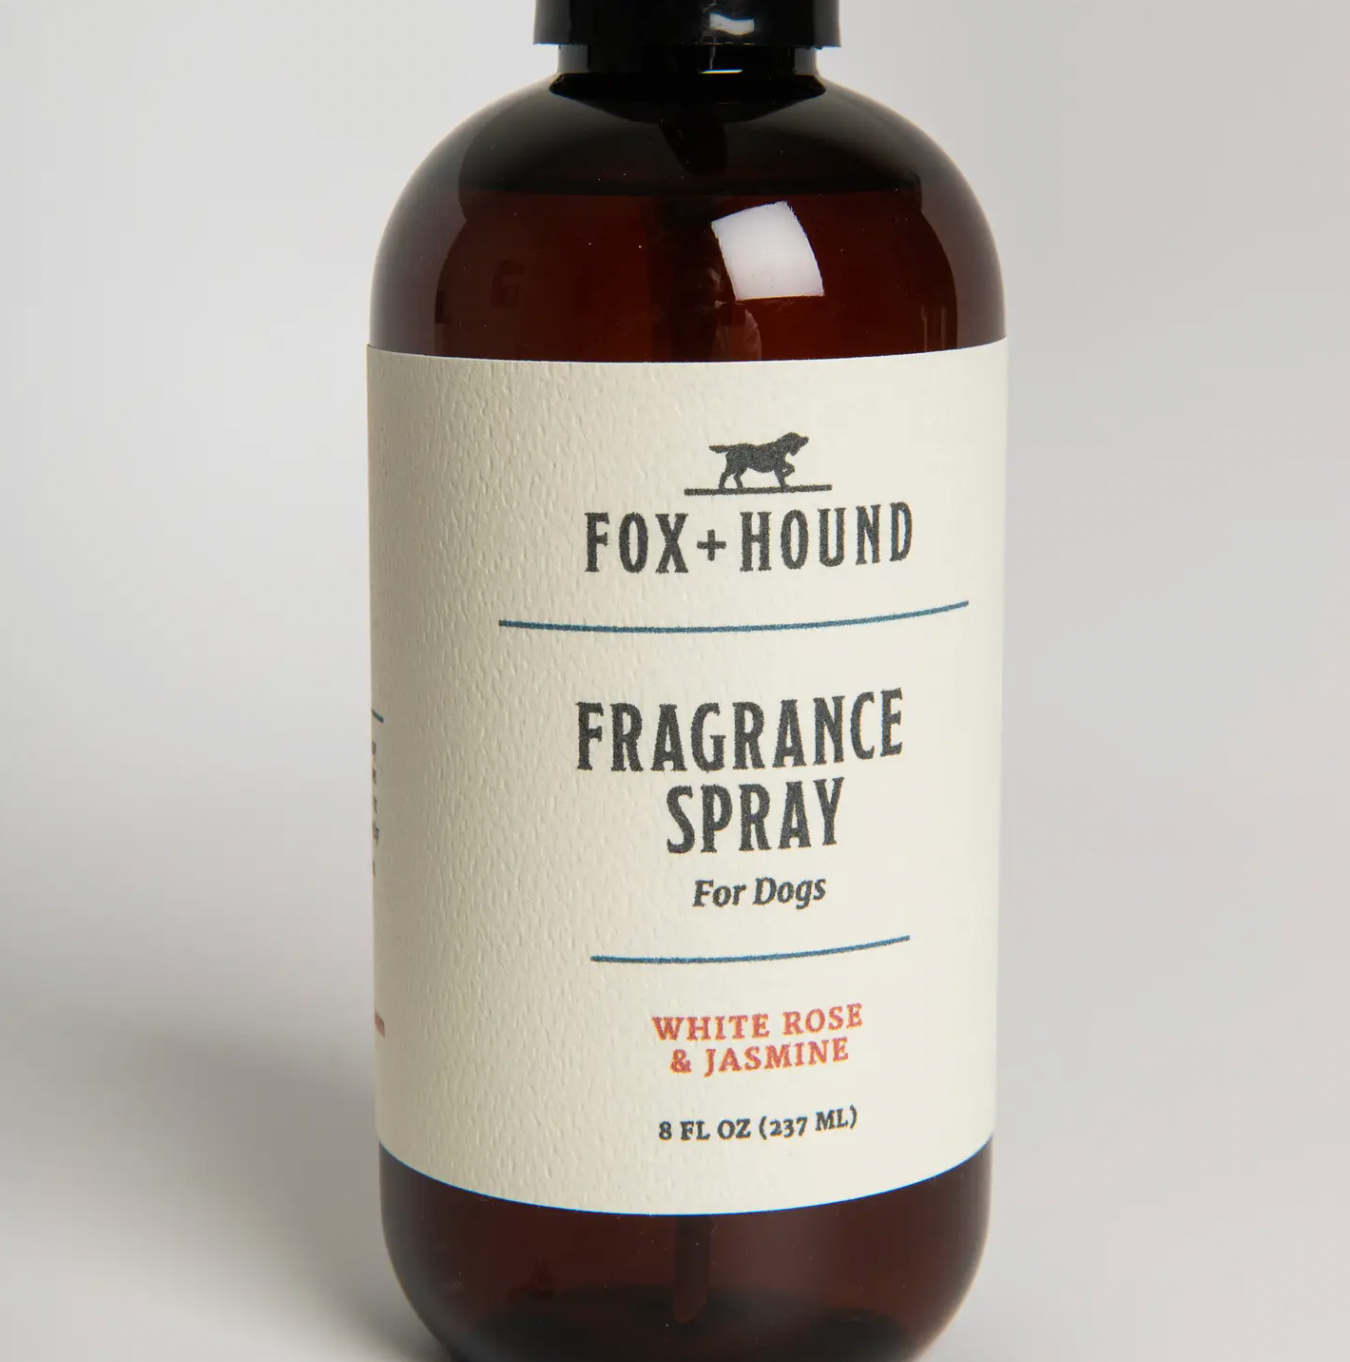 Fragrance Spray